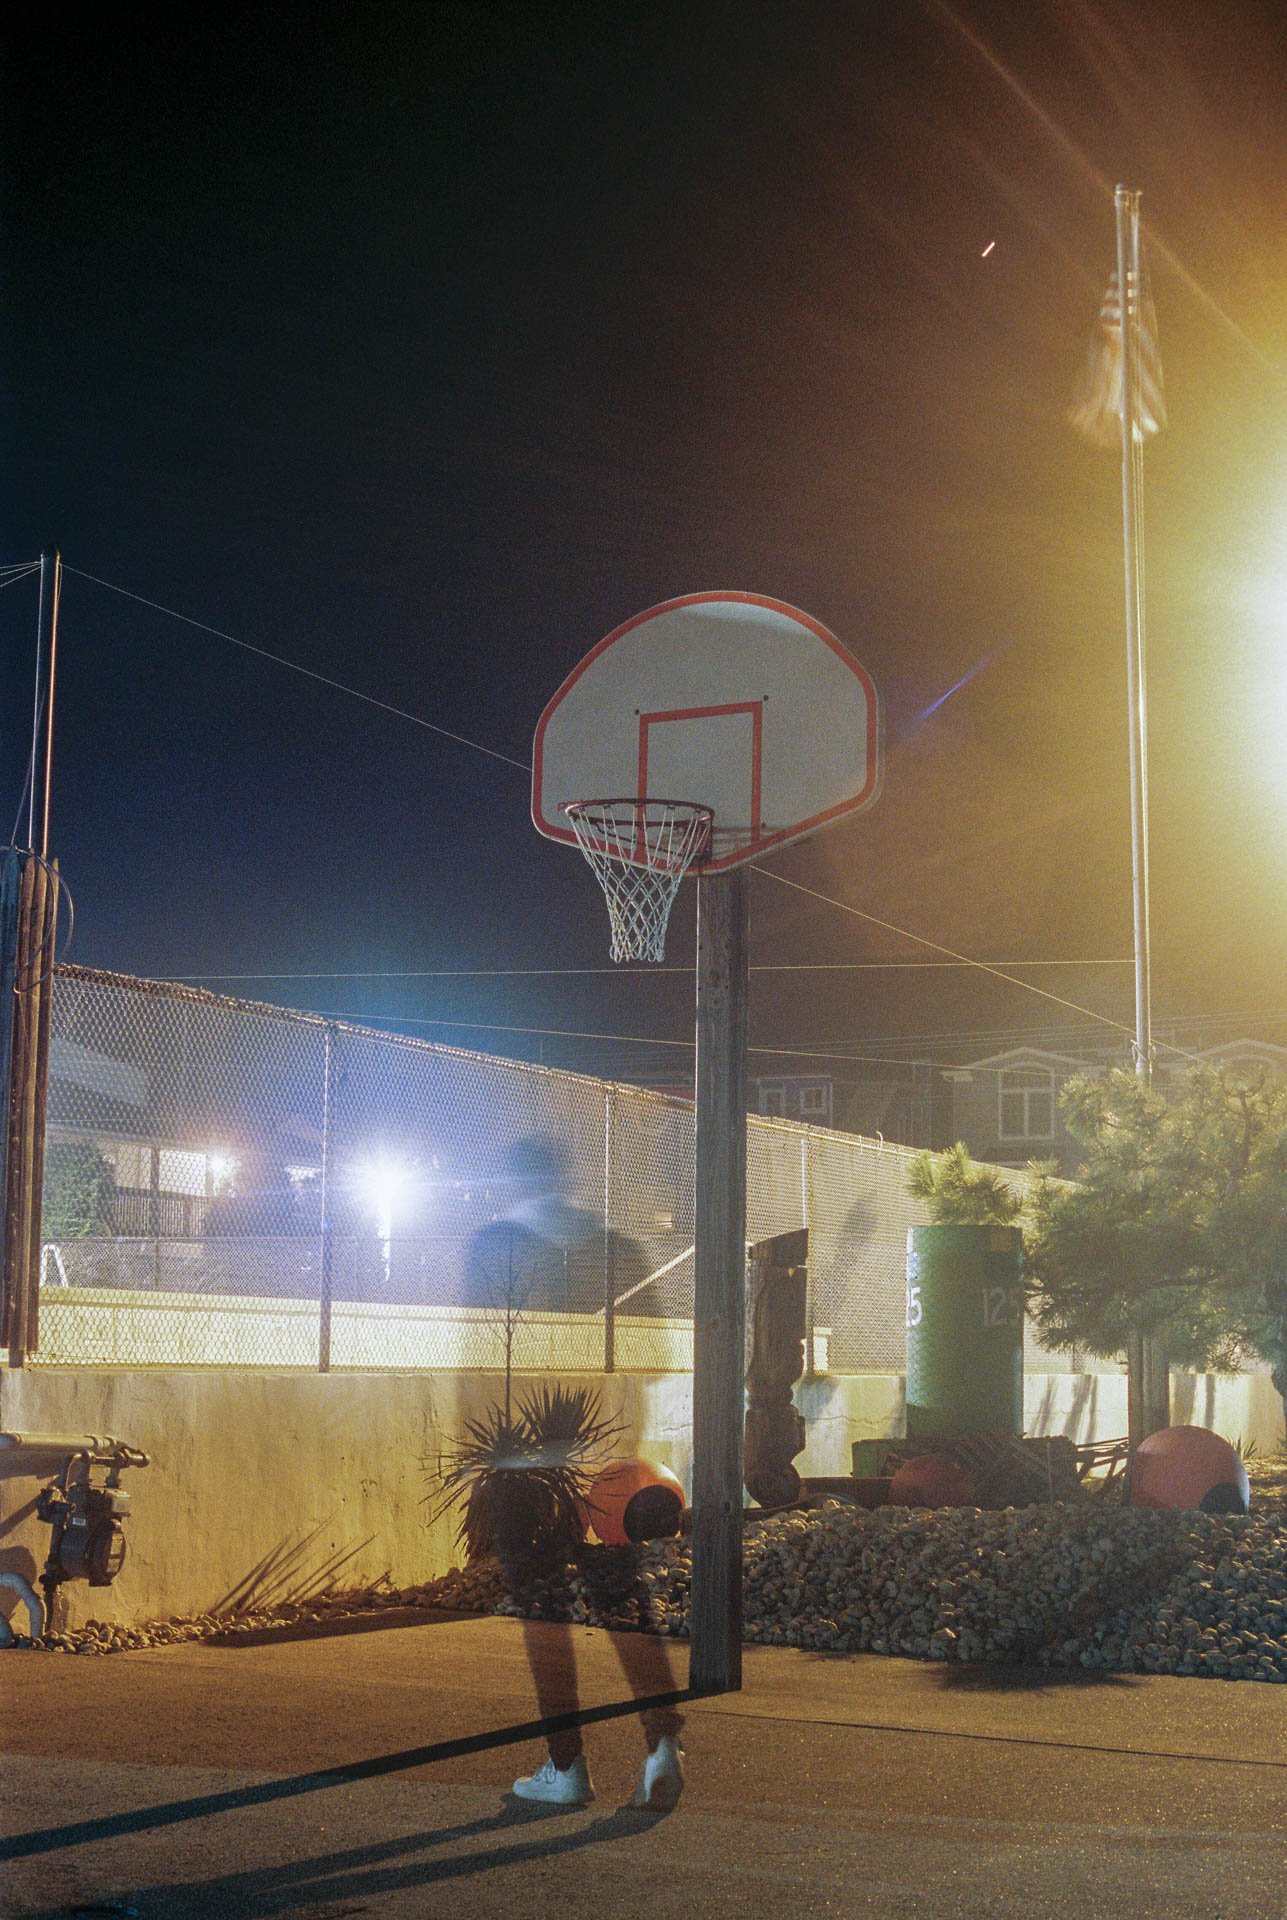 Motel-Basketball-Court-at-Night-on-Film.jpg